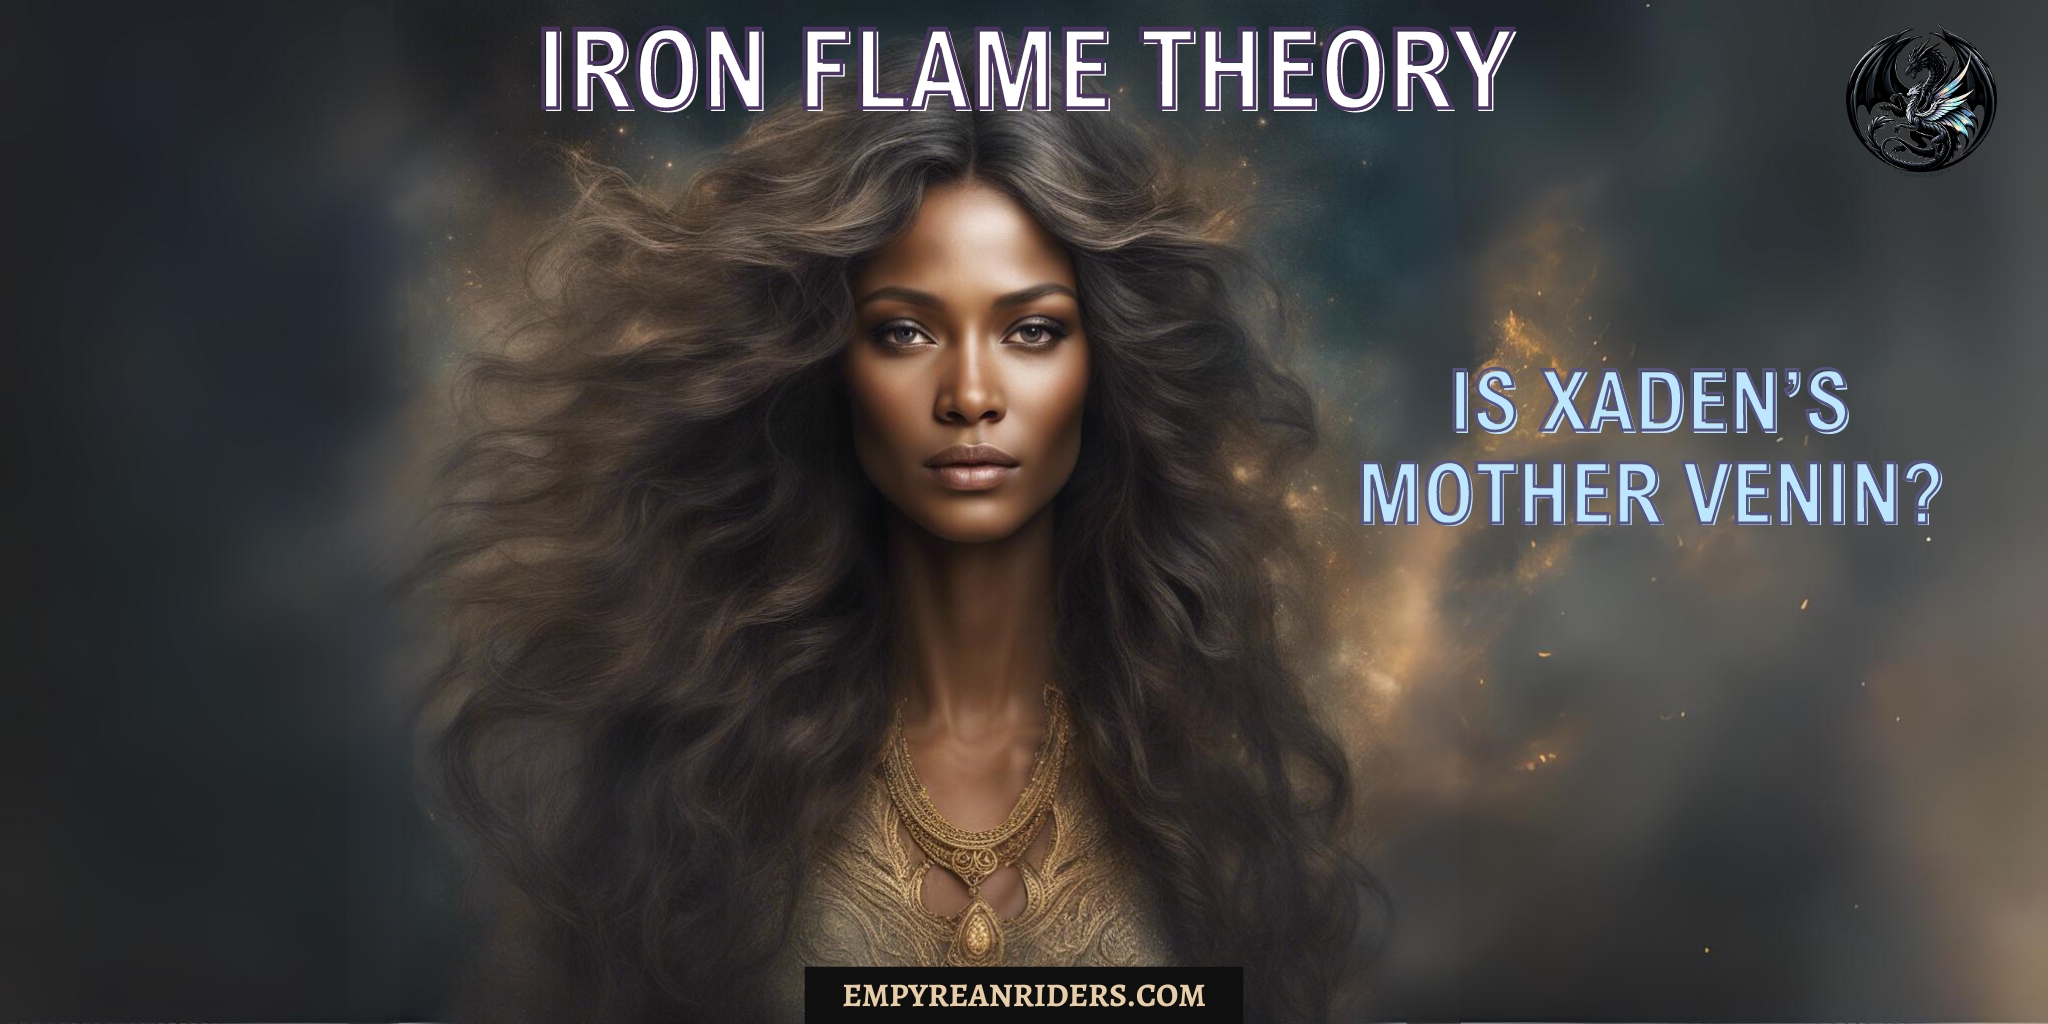 Fan Iron Flame Theory: Xaden’s mother is venin